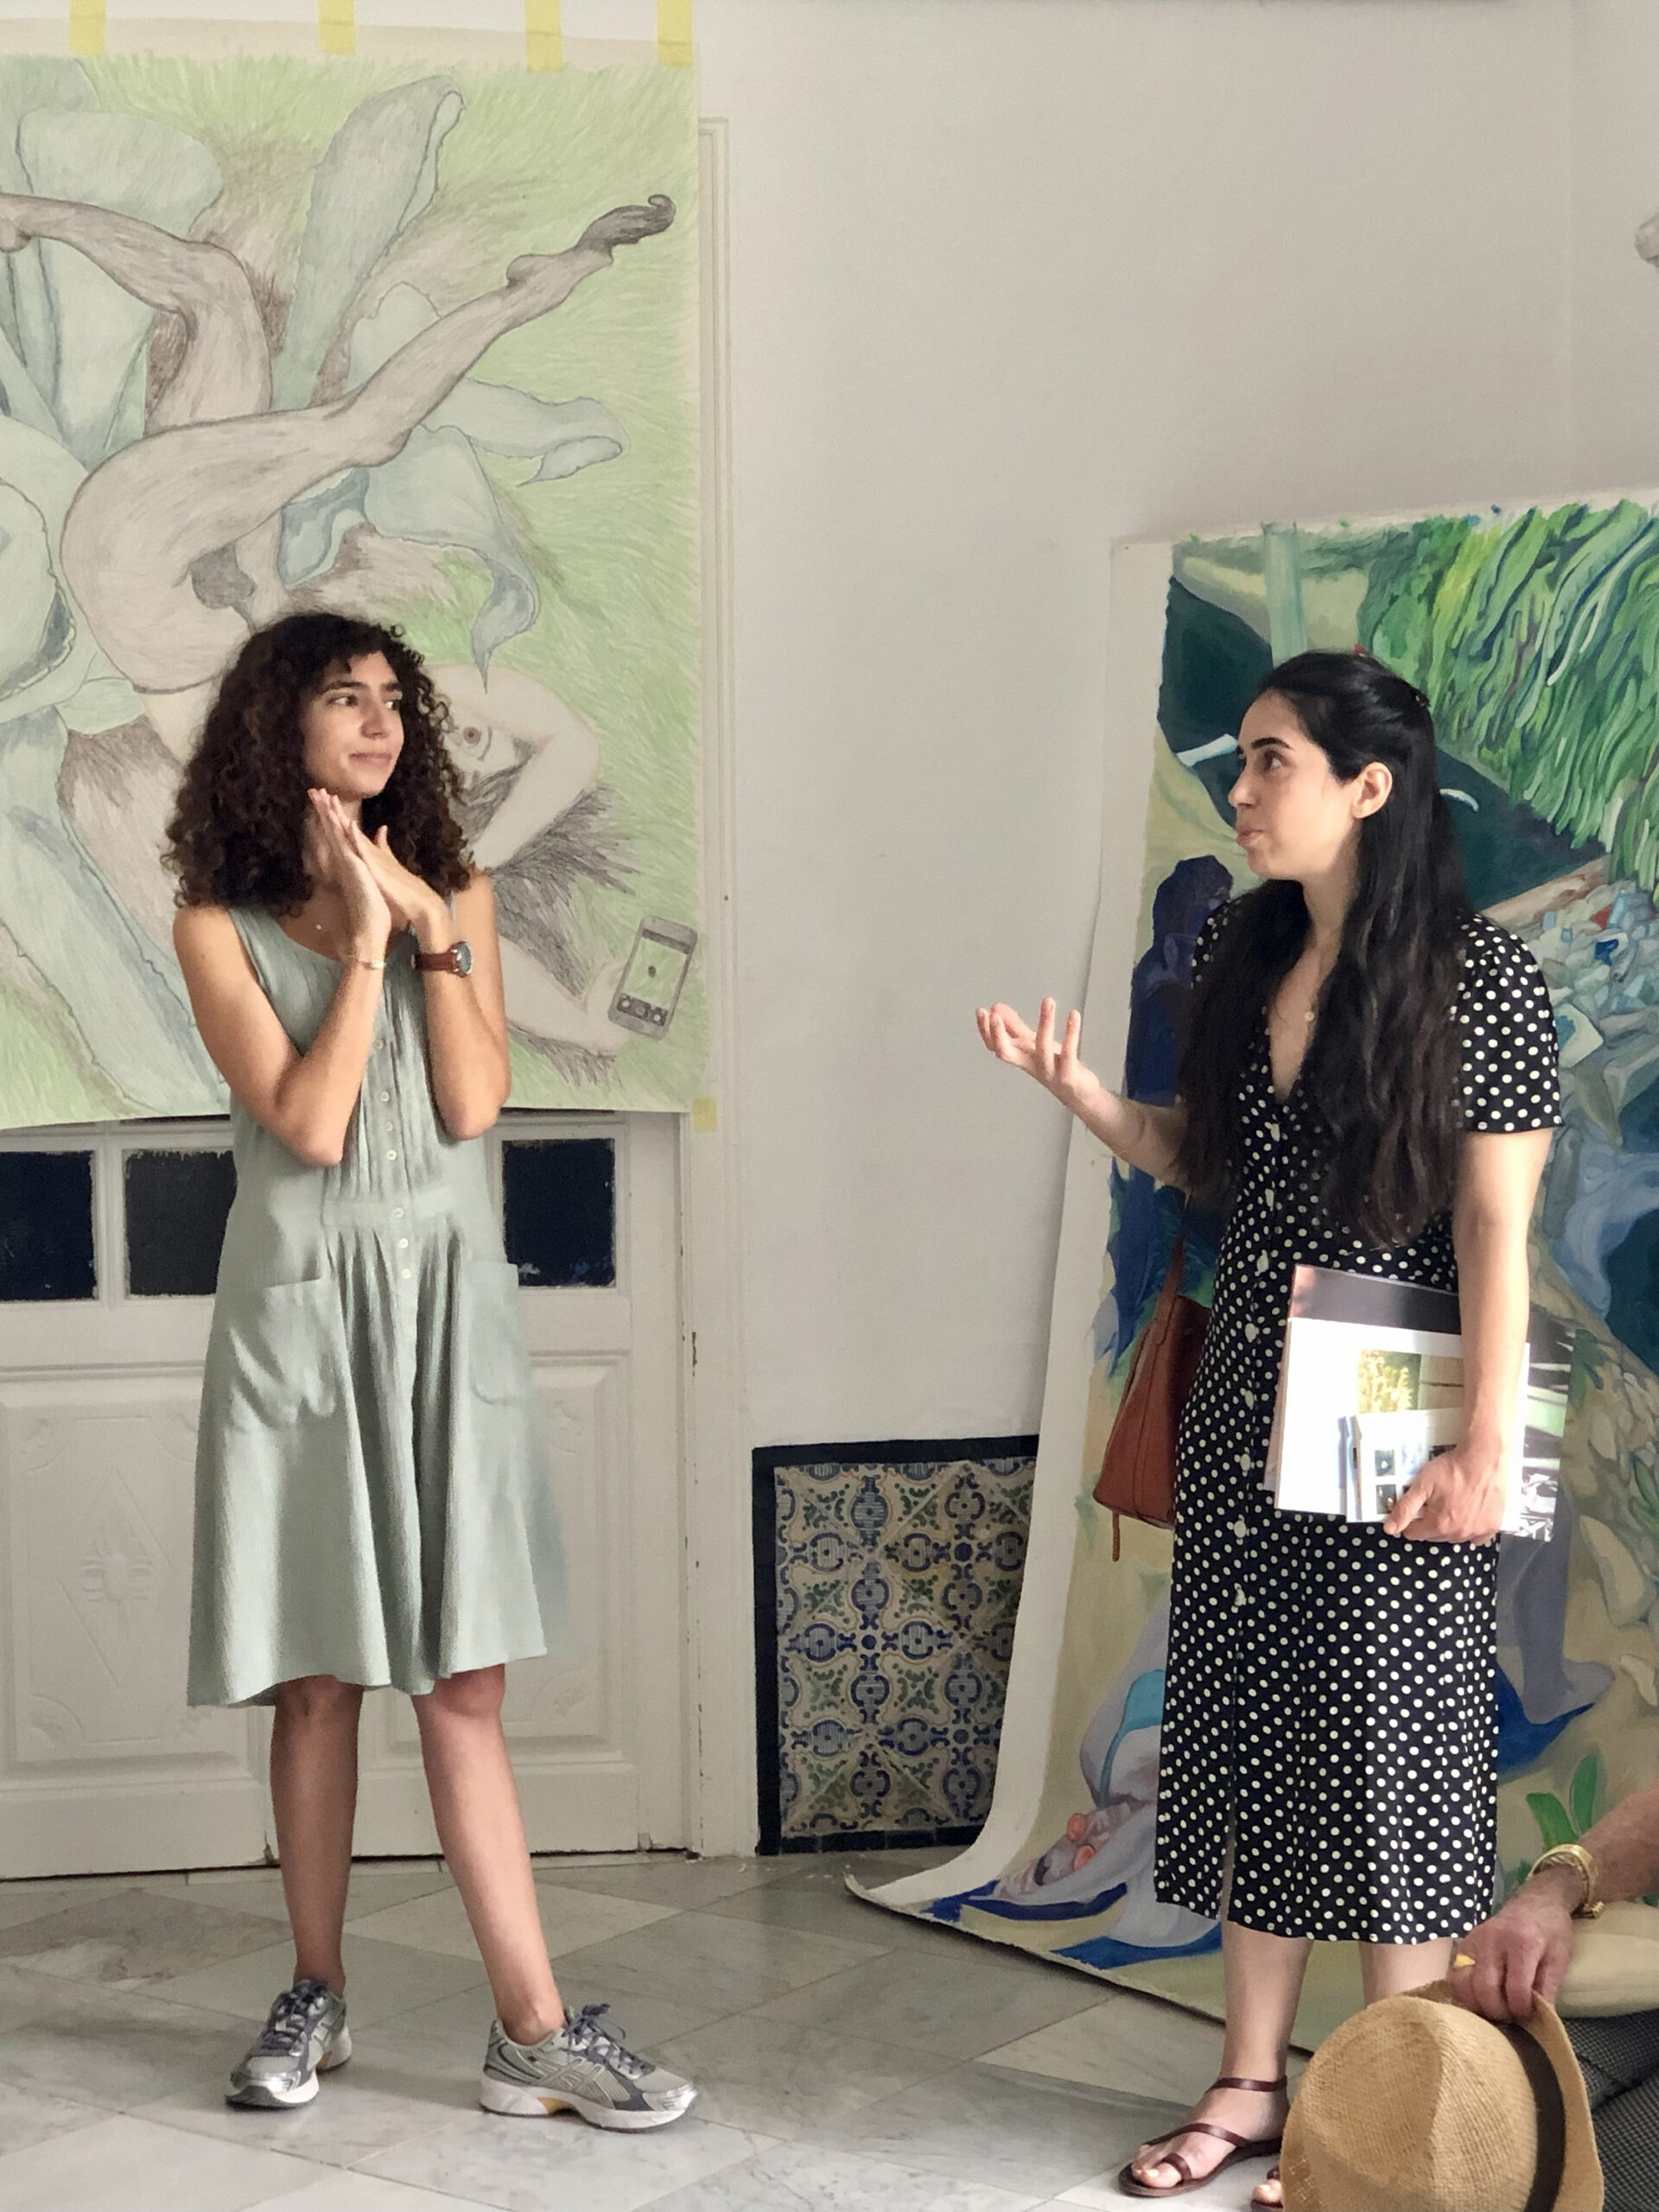 Myriam Ben Salah, Executive Director at Renaissance Society, in conversation with artist Yesmine Ben Khelil at her studio